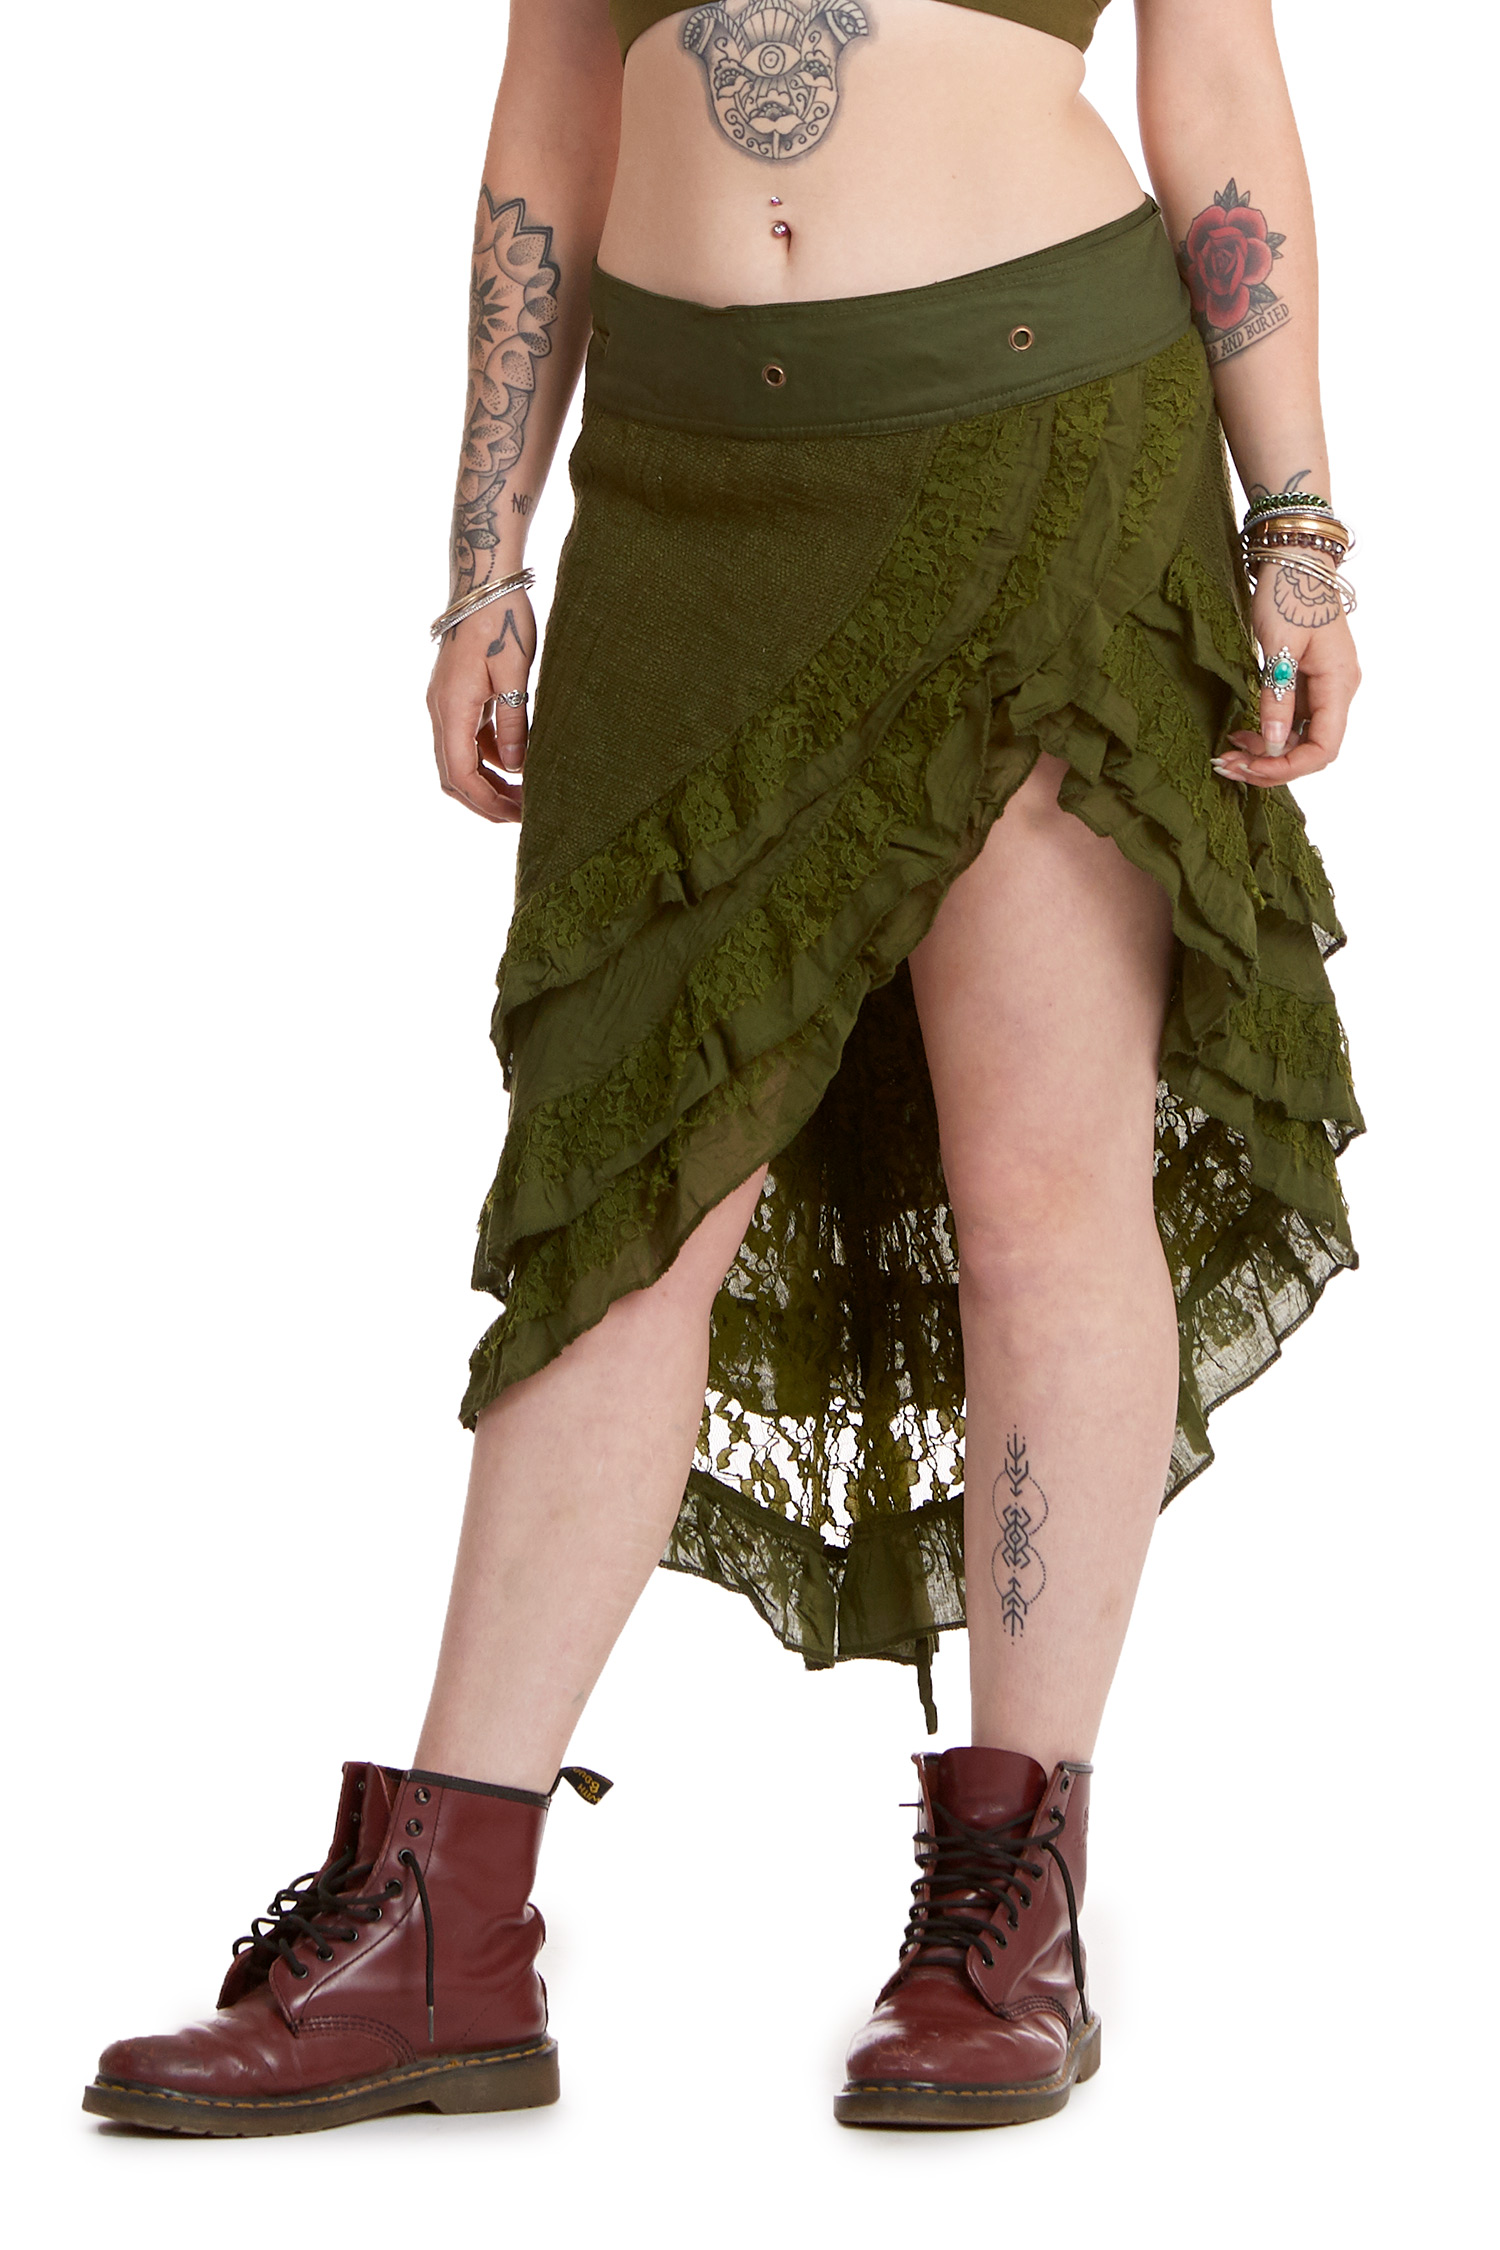 Layered Lace Earth Goddess Skirt | Altshop UK